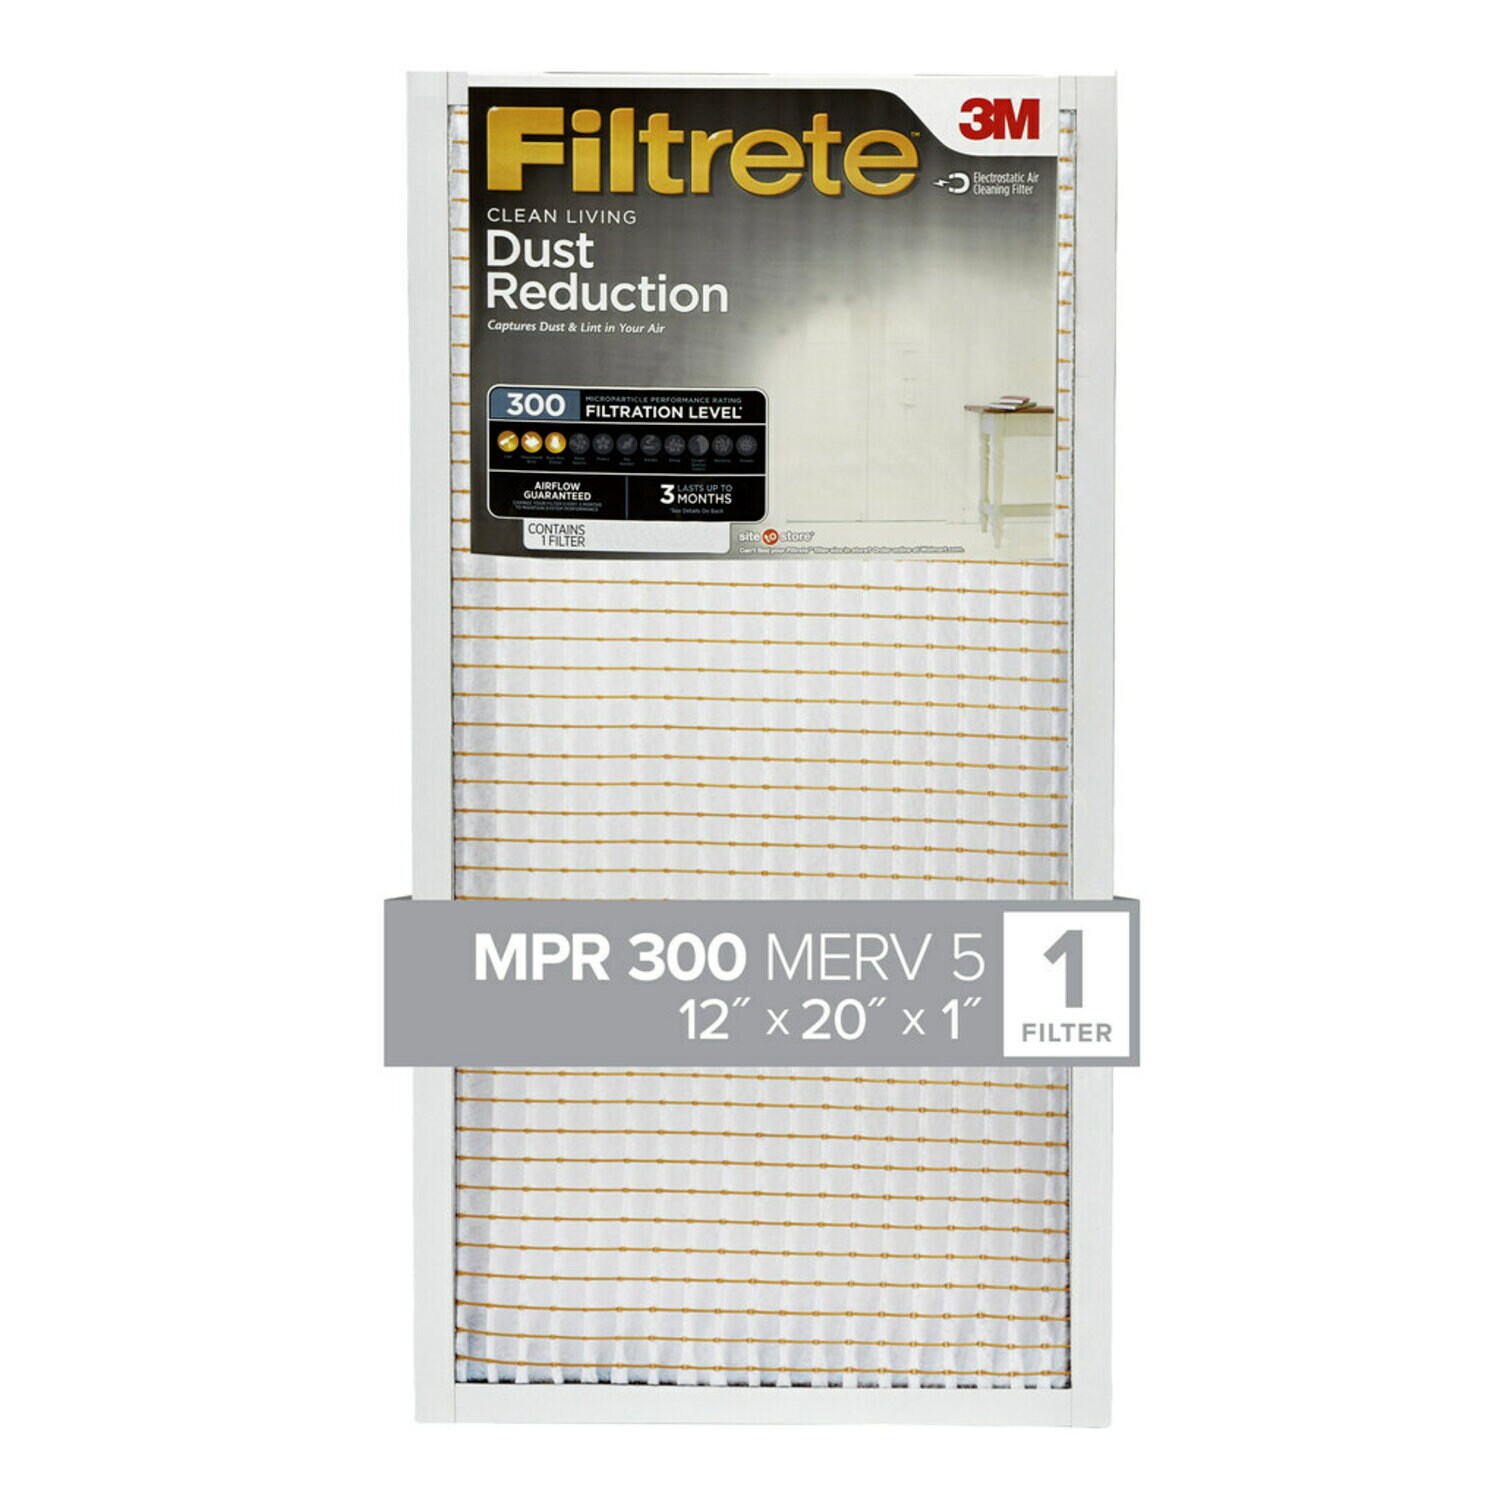 7100176826 - Filtrete Dust Reduction Filter 319-4, 12 in x 20 in x 1 in (30.4 cm x
50.8 cm x 2.5 cm)